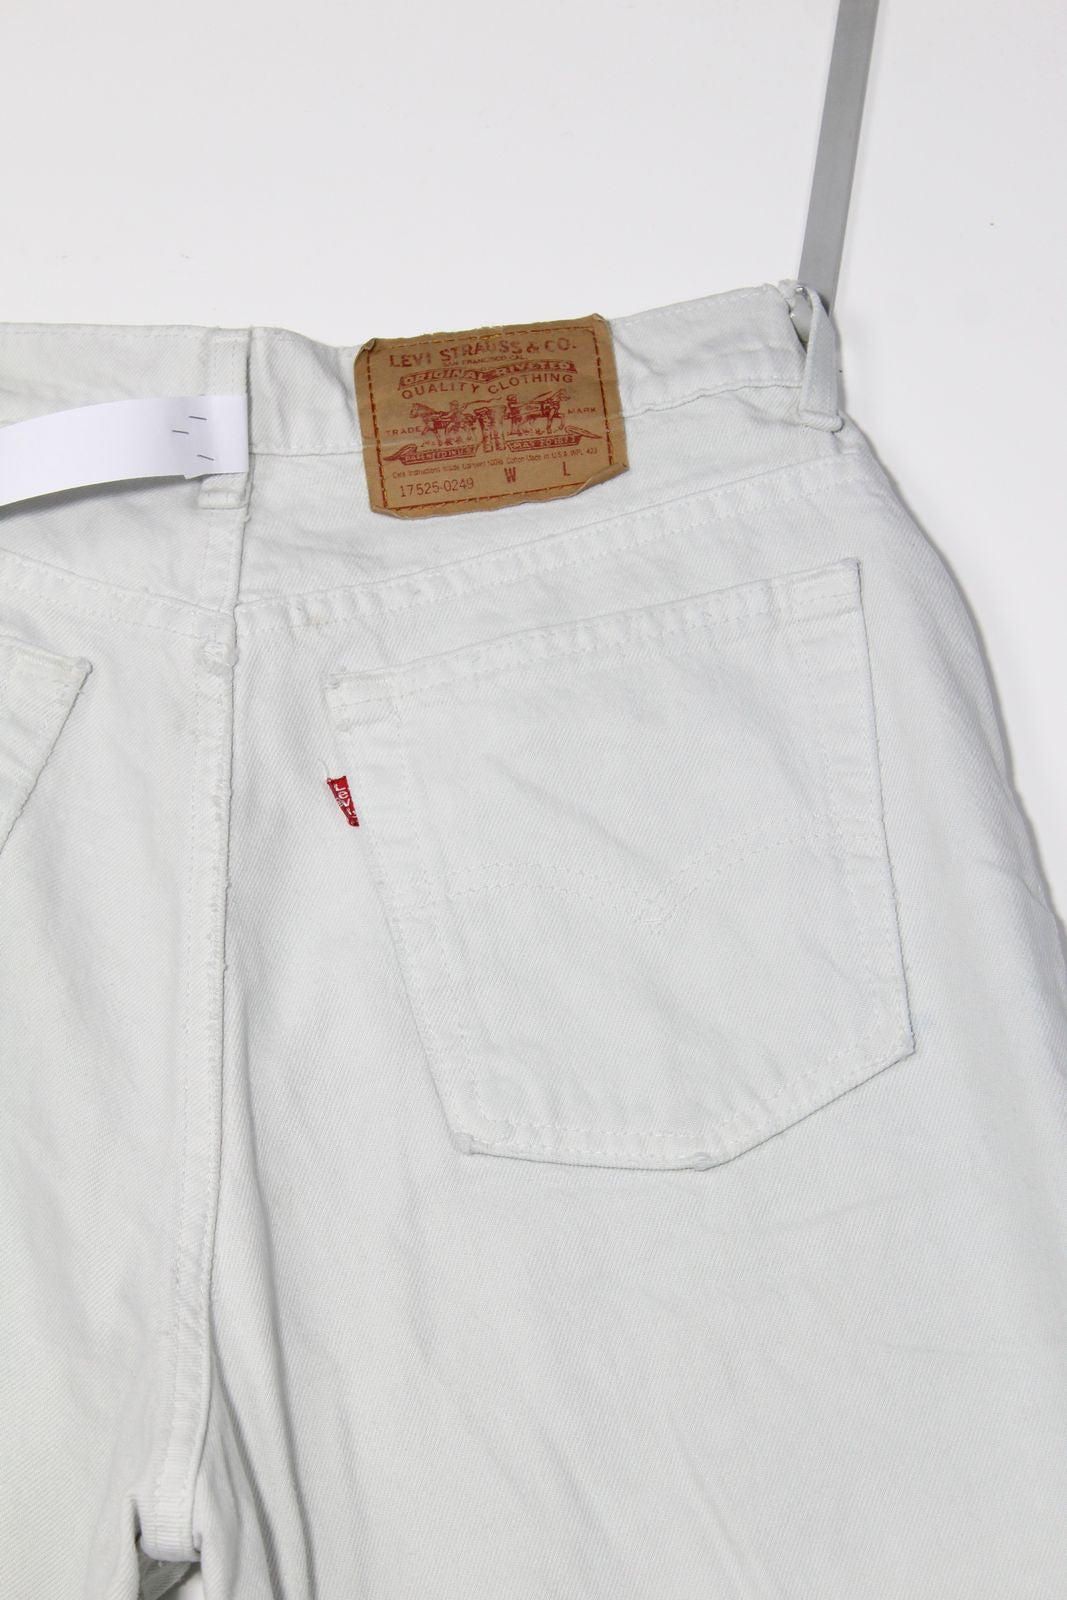 Levi's 17525 Made In USA Taglia 15 Med Jeans Vintage